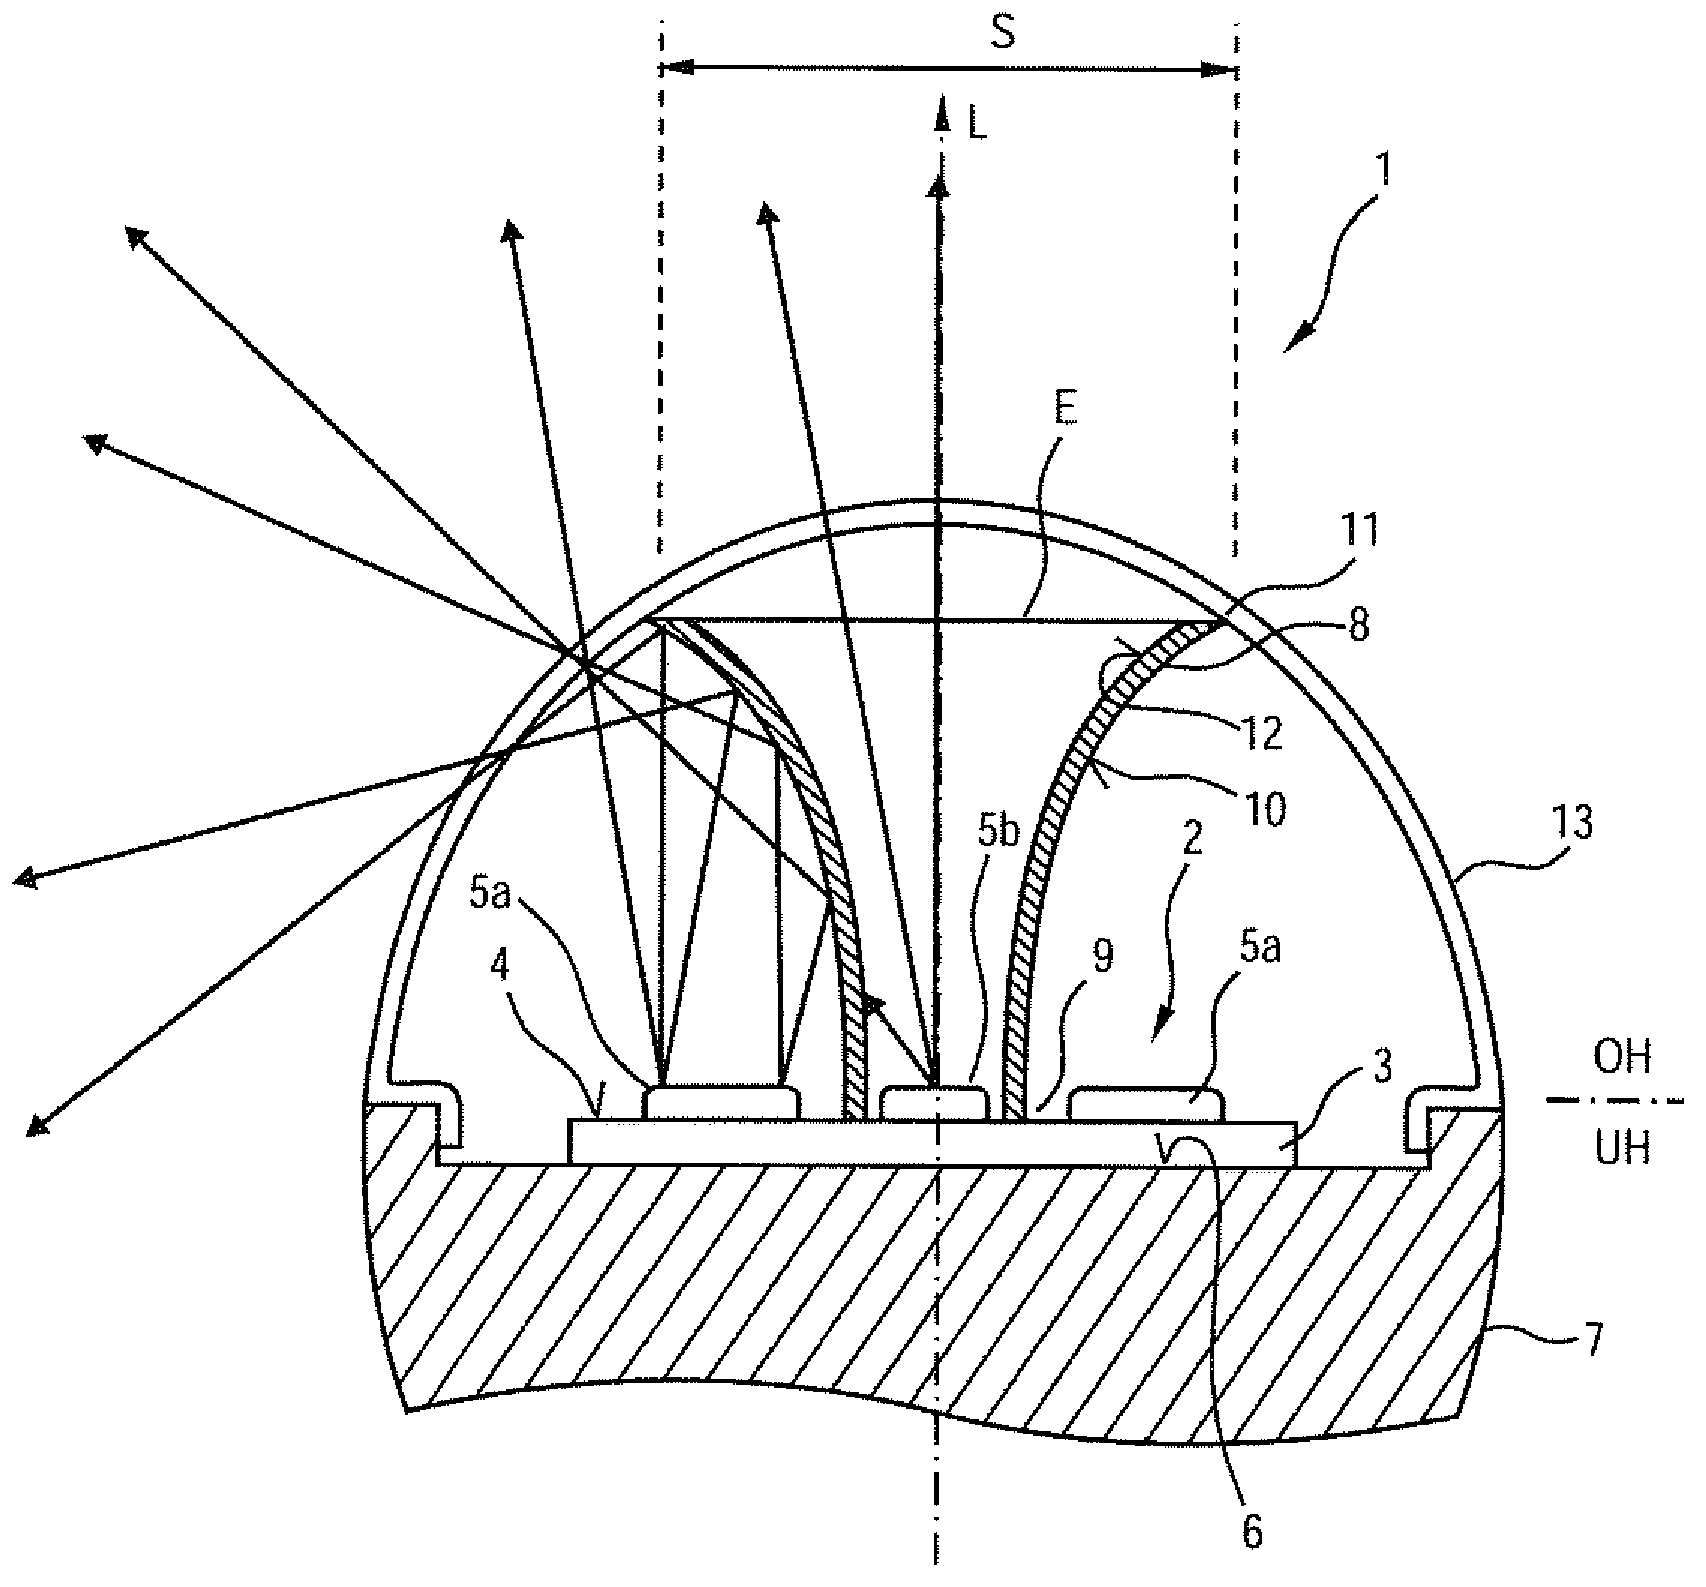 Illumination device and method for producing an illumination device